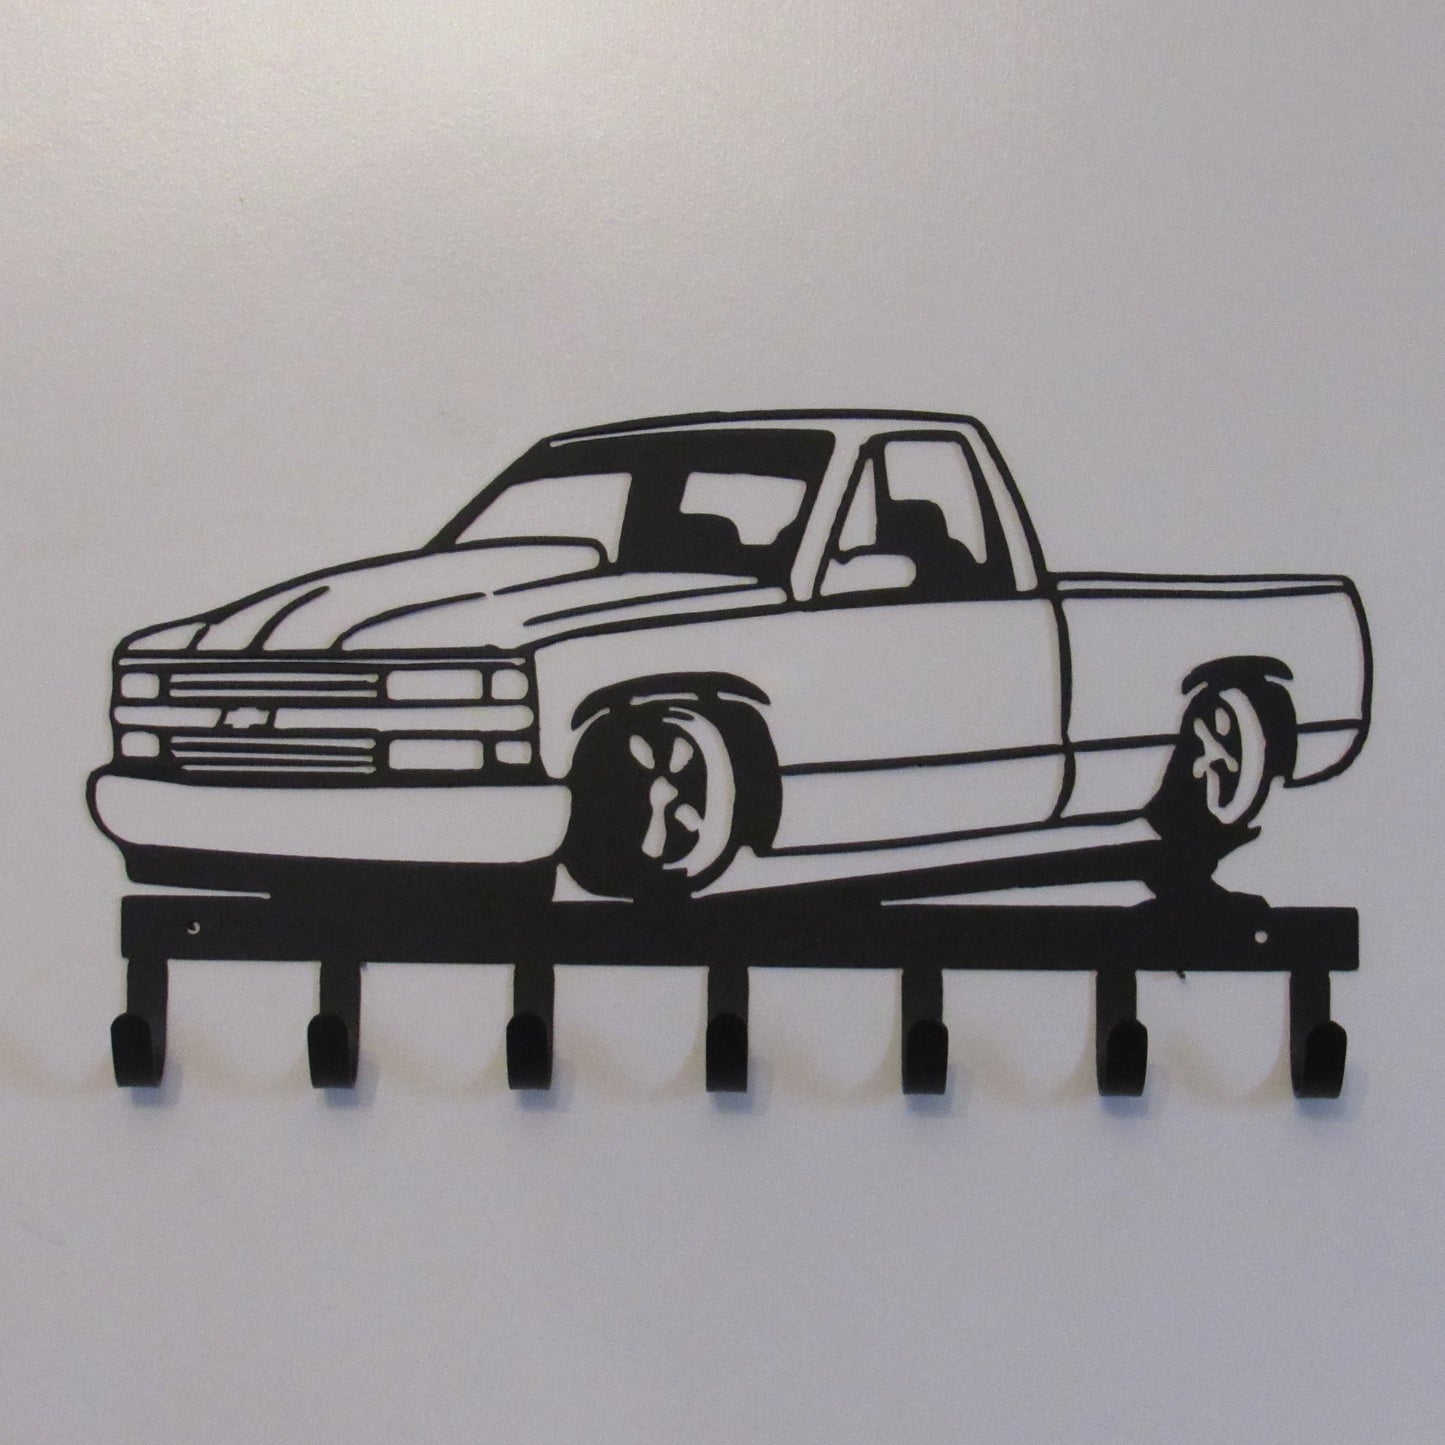 Chevy OBS Truck Key/Hat Rack